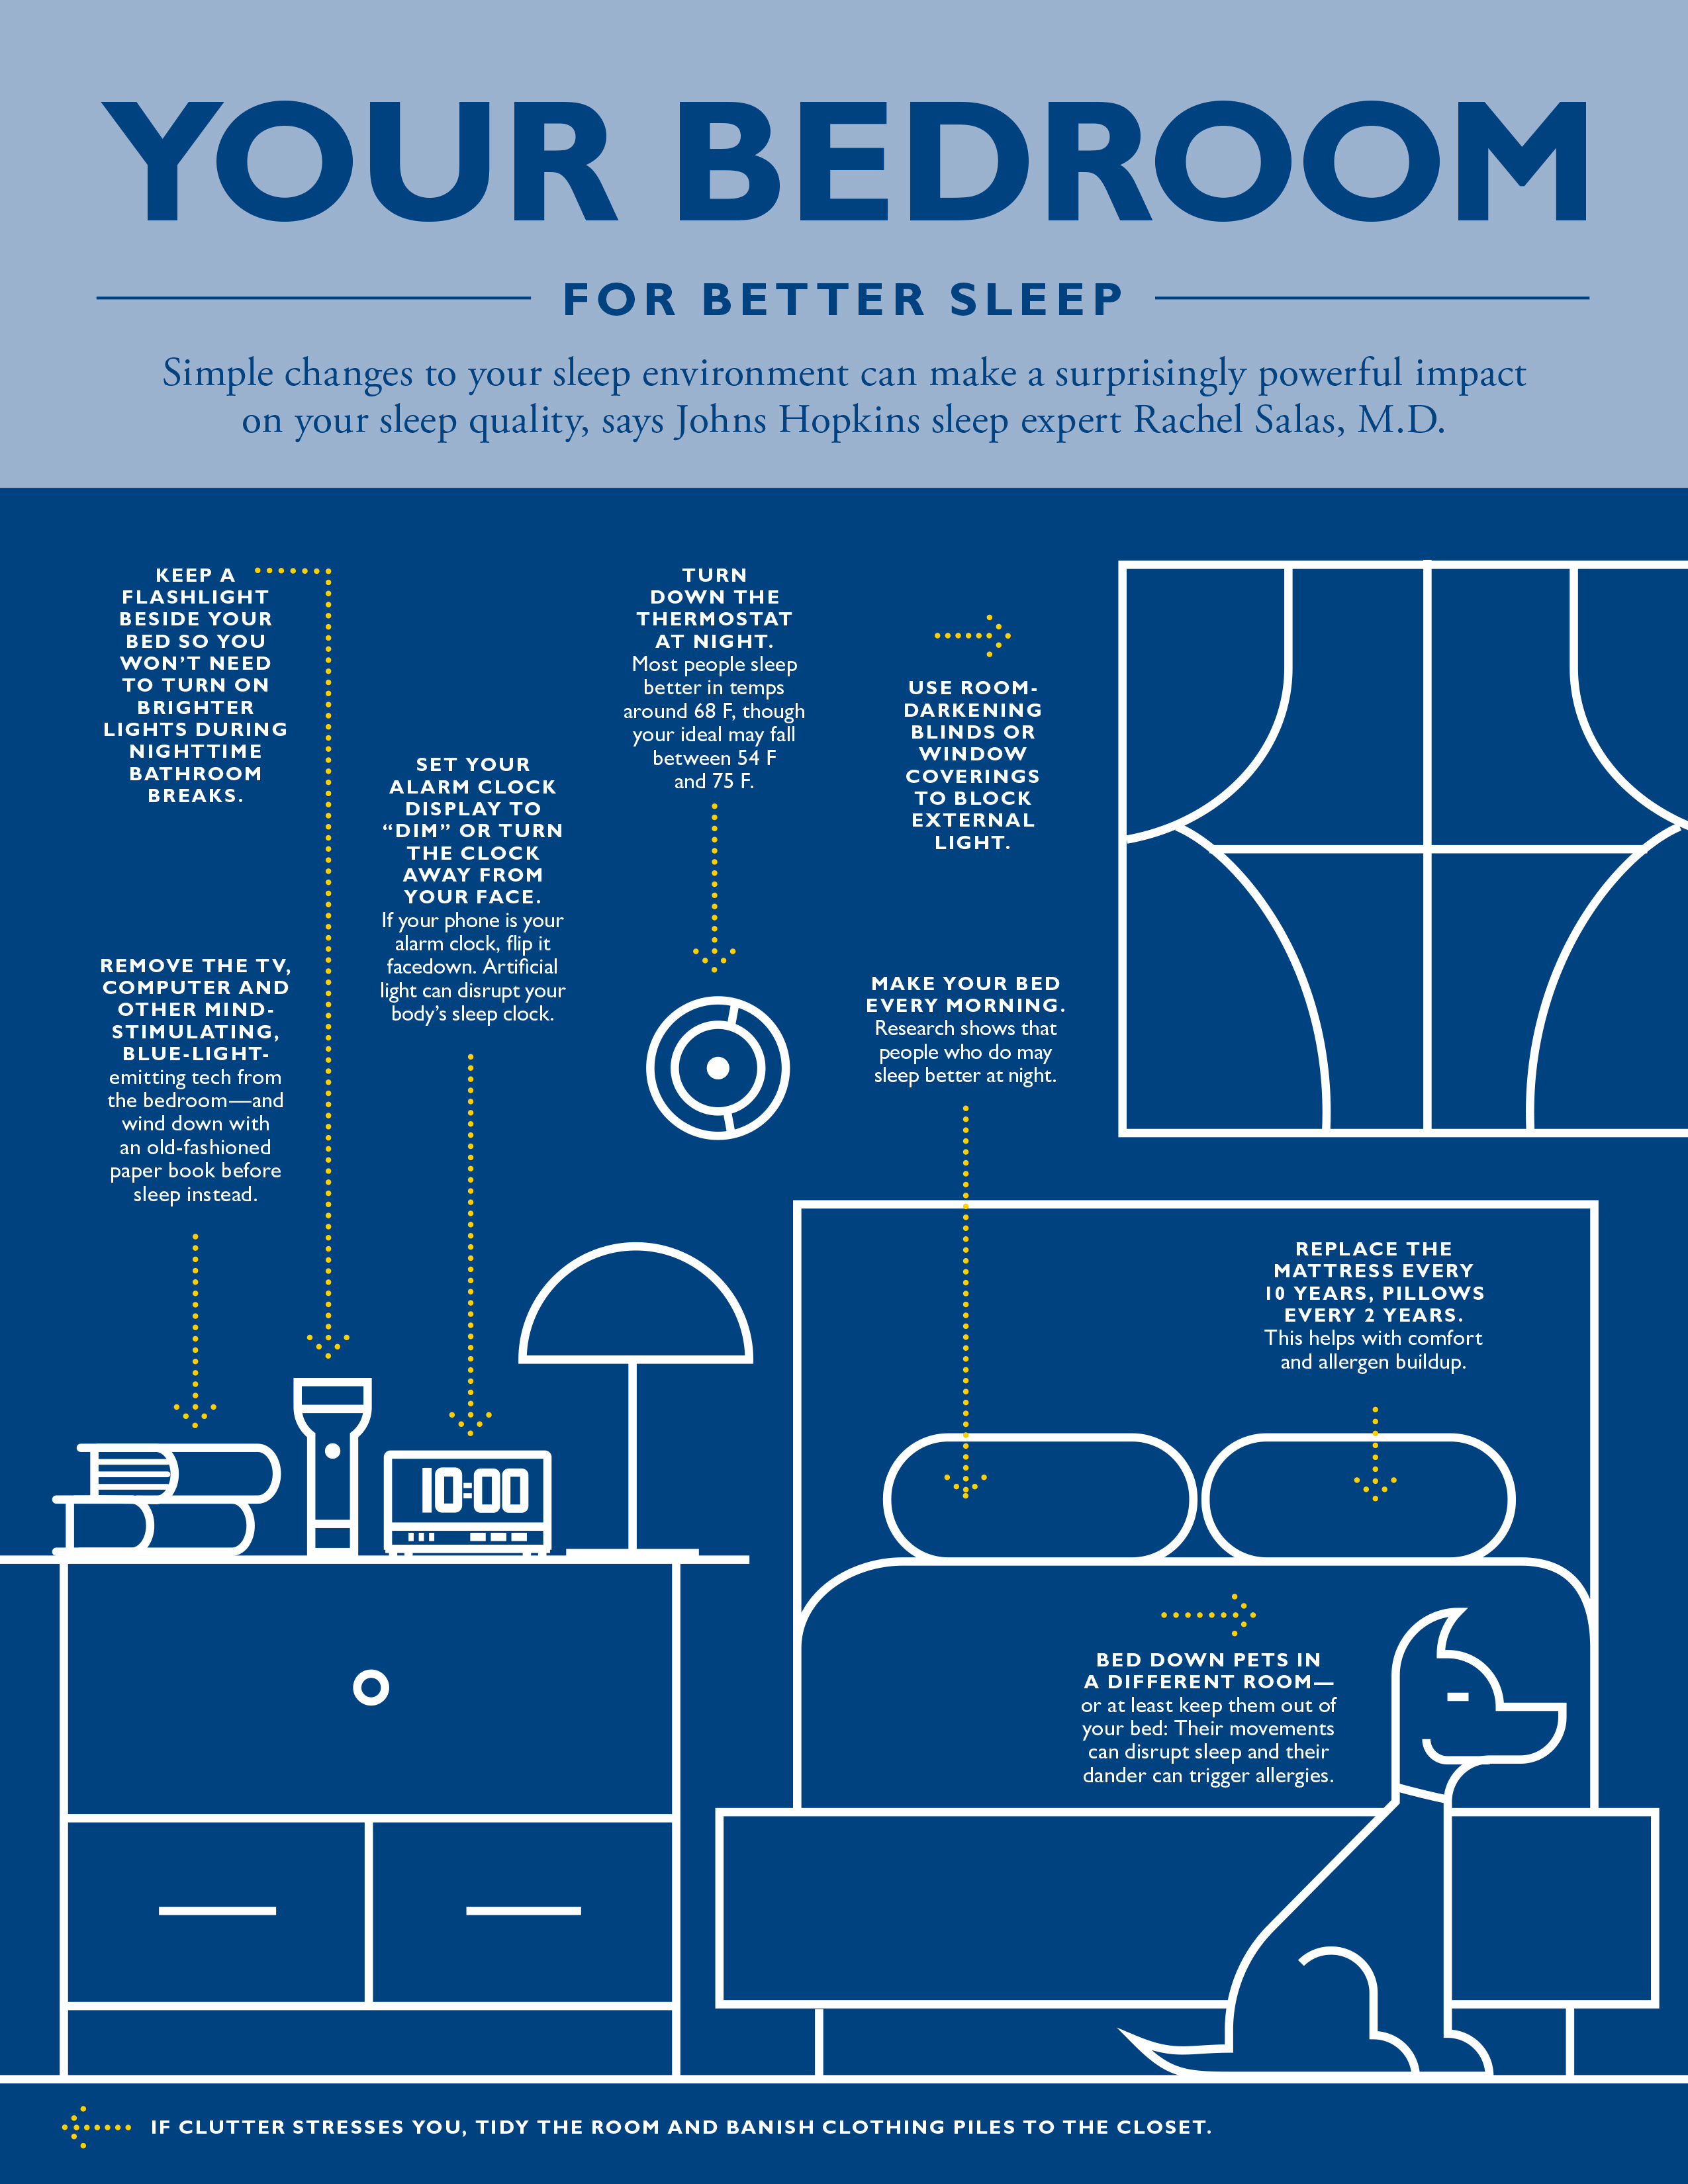 Your Bedroom For Better Sleep Johns Hopkins Medicine